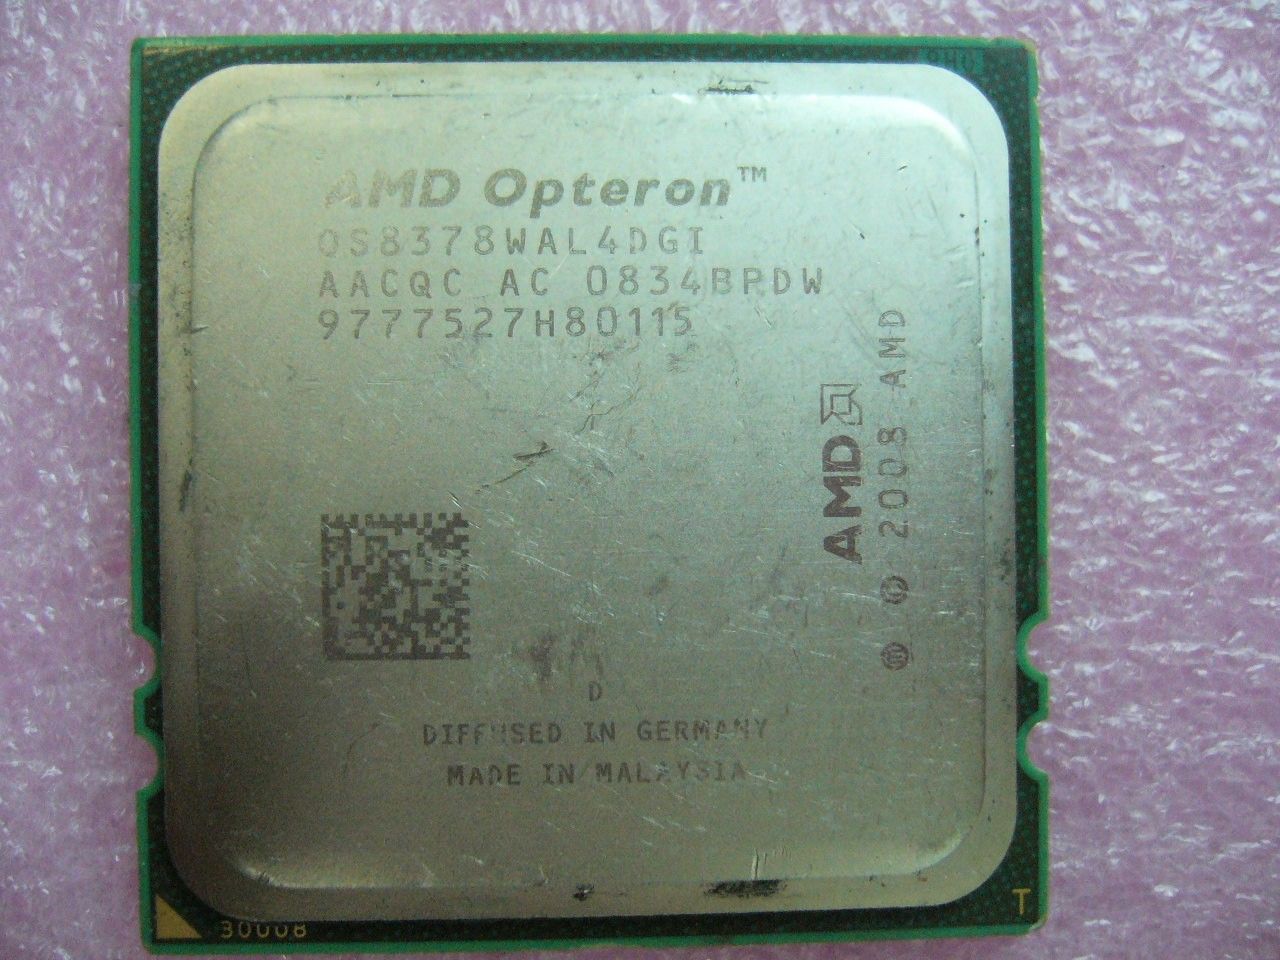 QTY 1x AMD Opteron 8378 2.4 GHz Quad-Core (OS8378WAL4DGI) CPU Socket F 1207